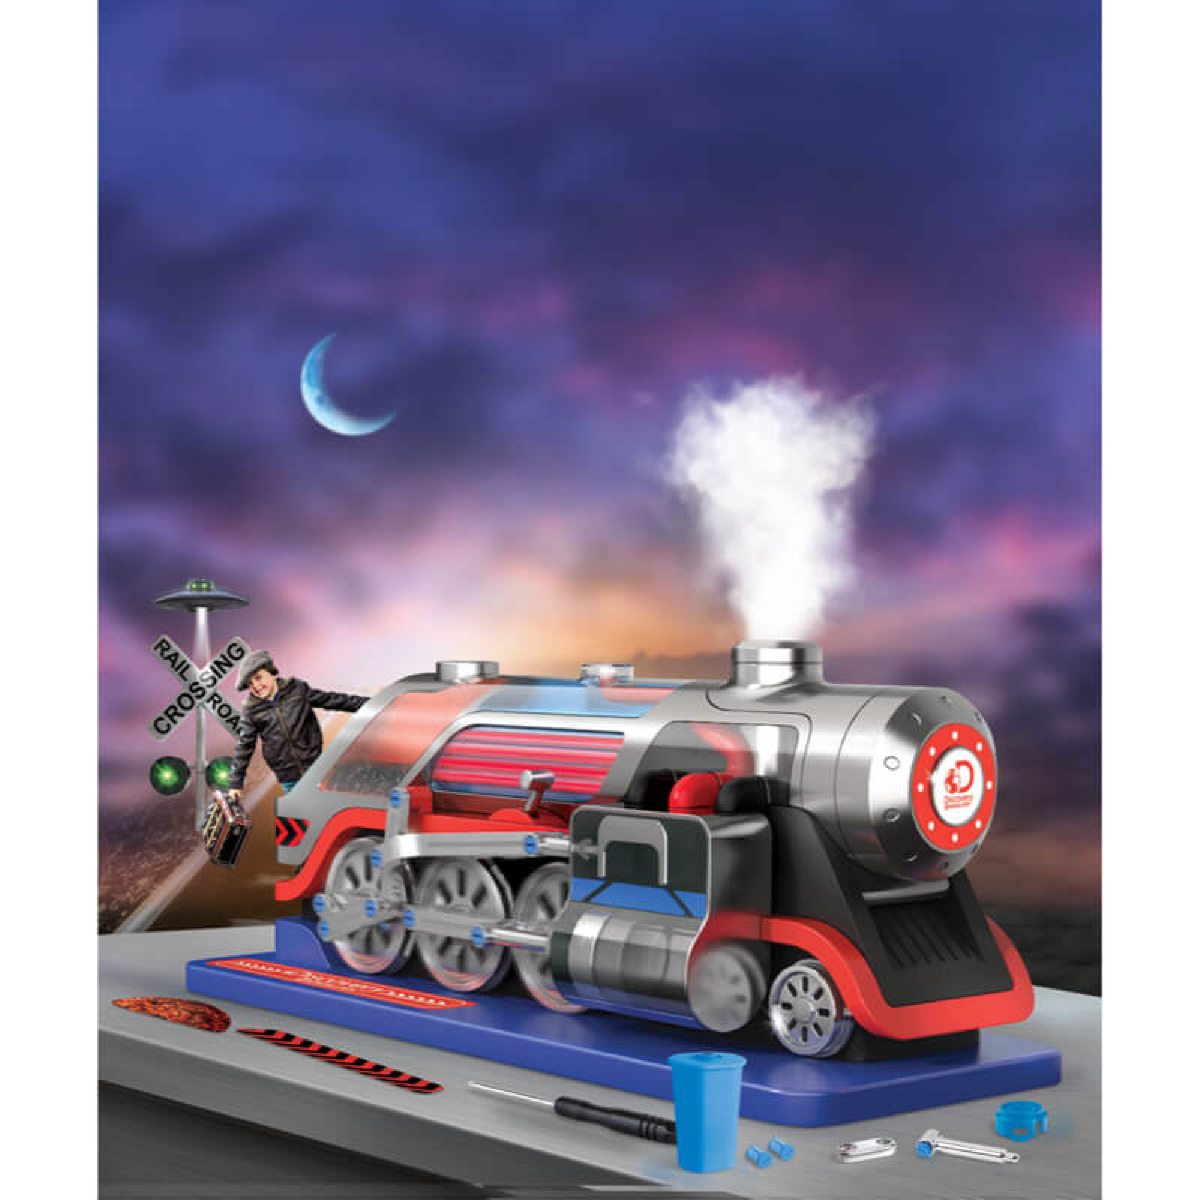 Discovery Kids DIY Model Steam Engine Kit 1423005920